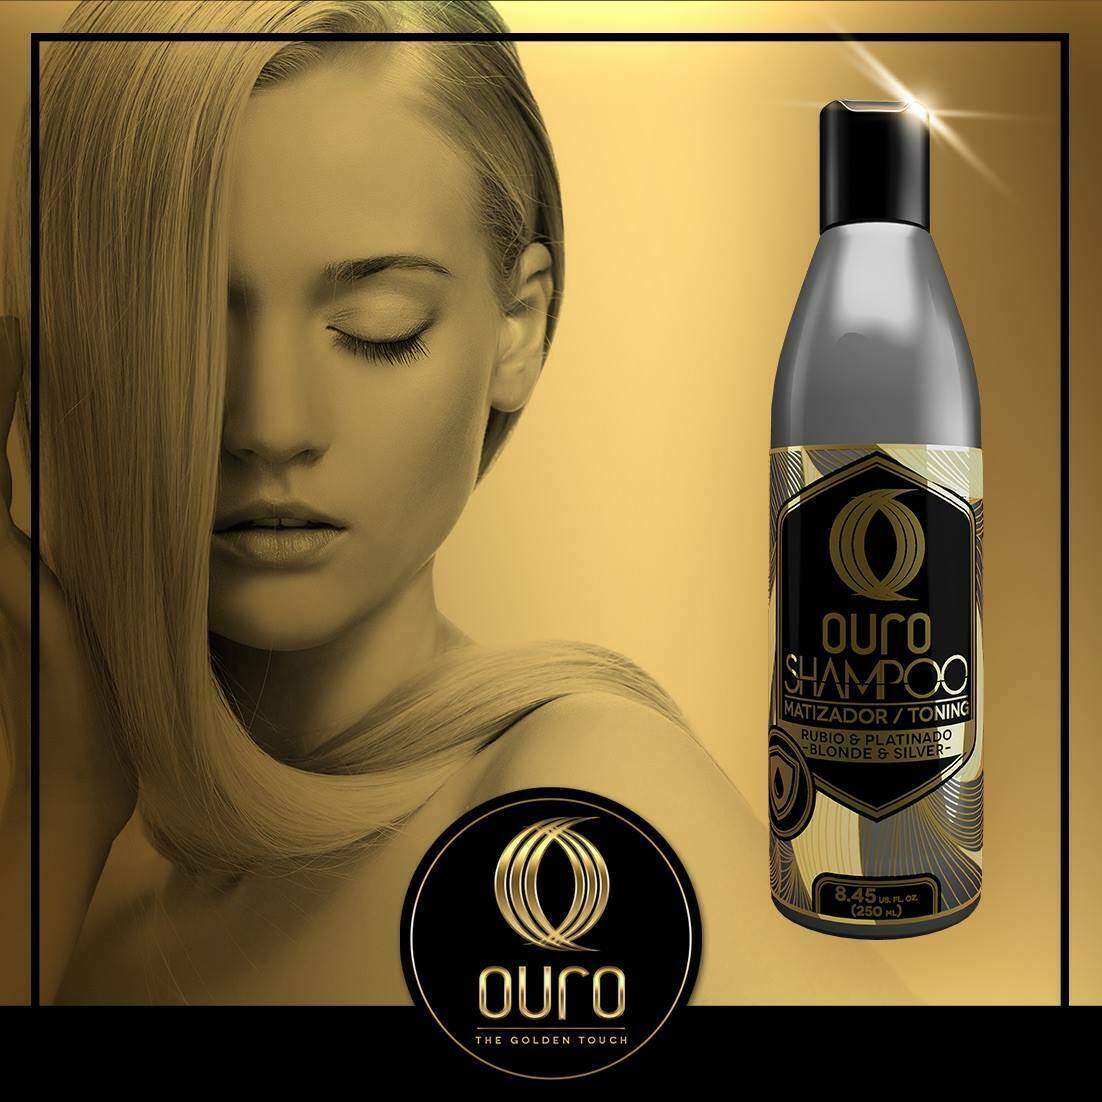 Ouro Shampoo Toning Blonde & Silver Hair Treatment 8.45oz, Shampoo Matizador